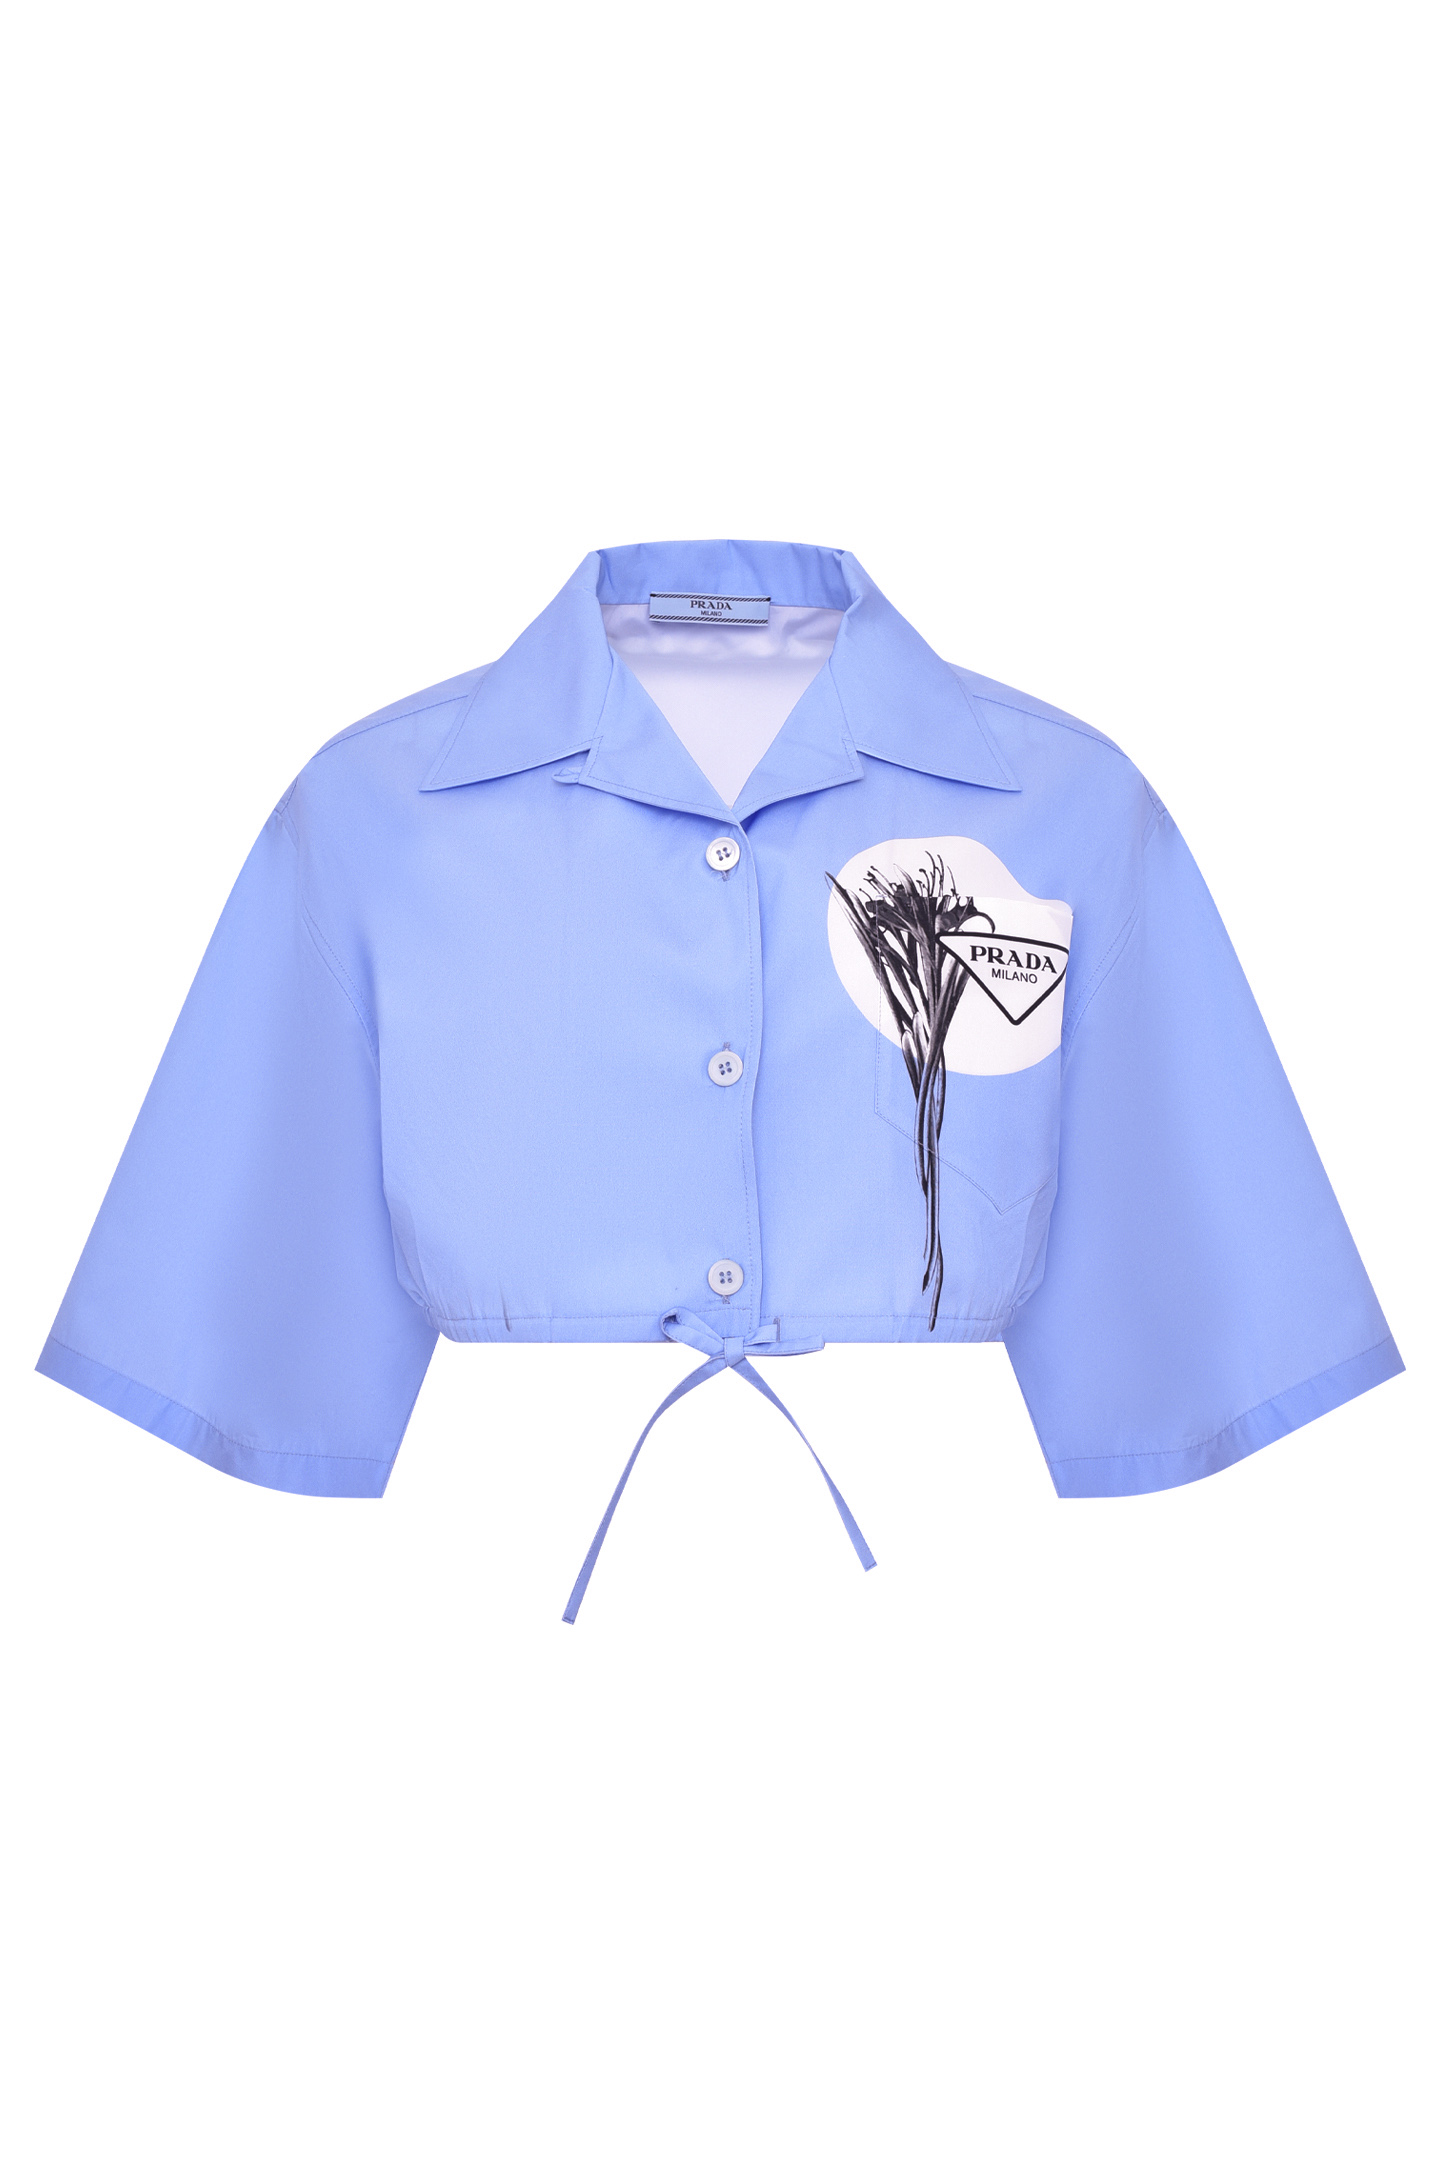 Рубашка PRADA P459F 10N2, цвет: Голубой, Женский